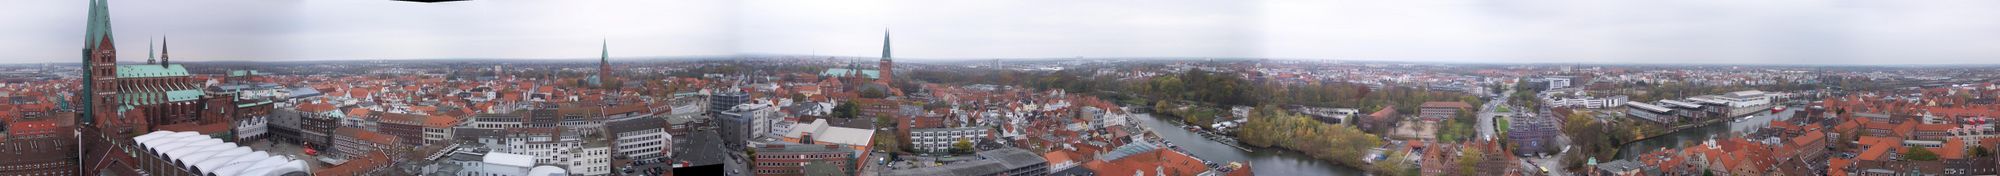 Lübeck - Überblick vom Turm von St. Petri